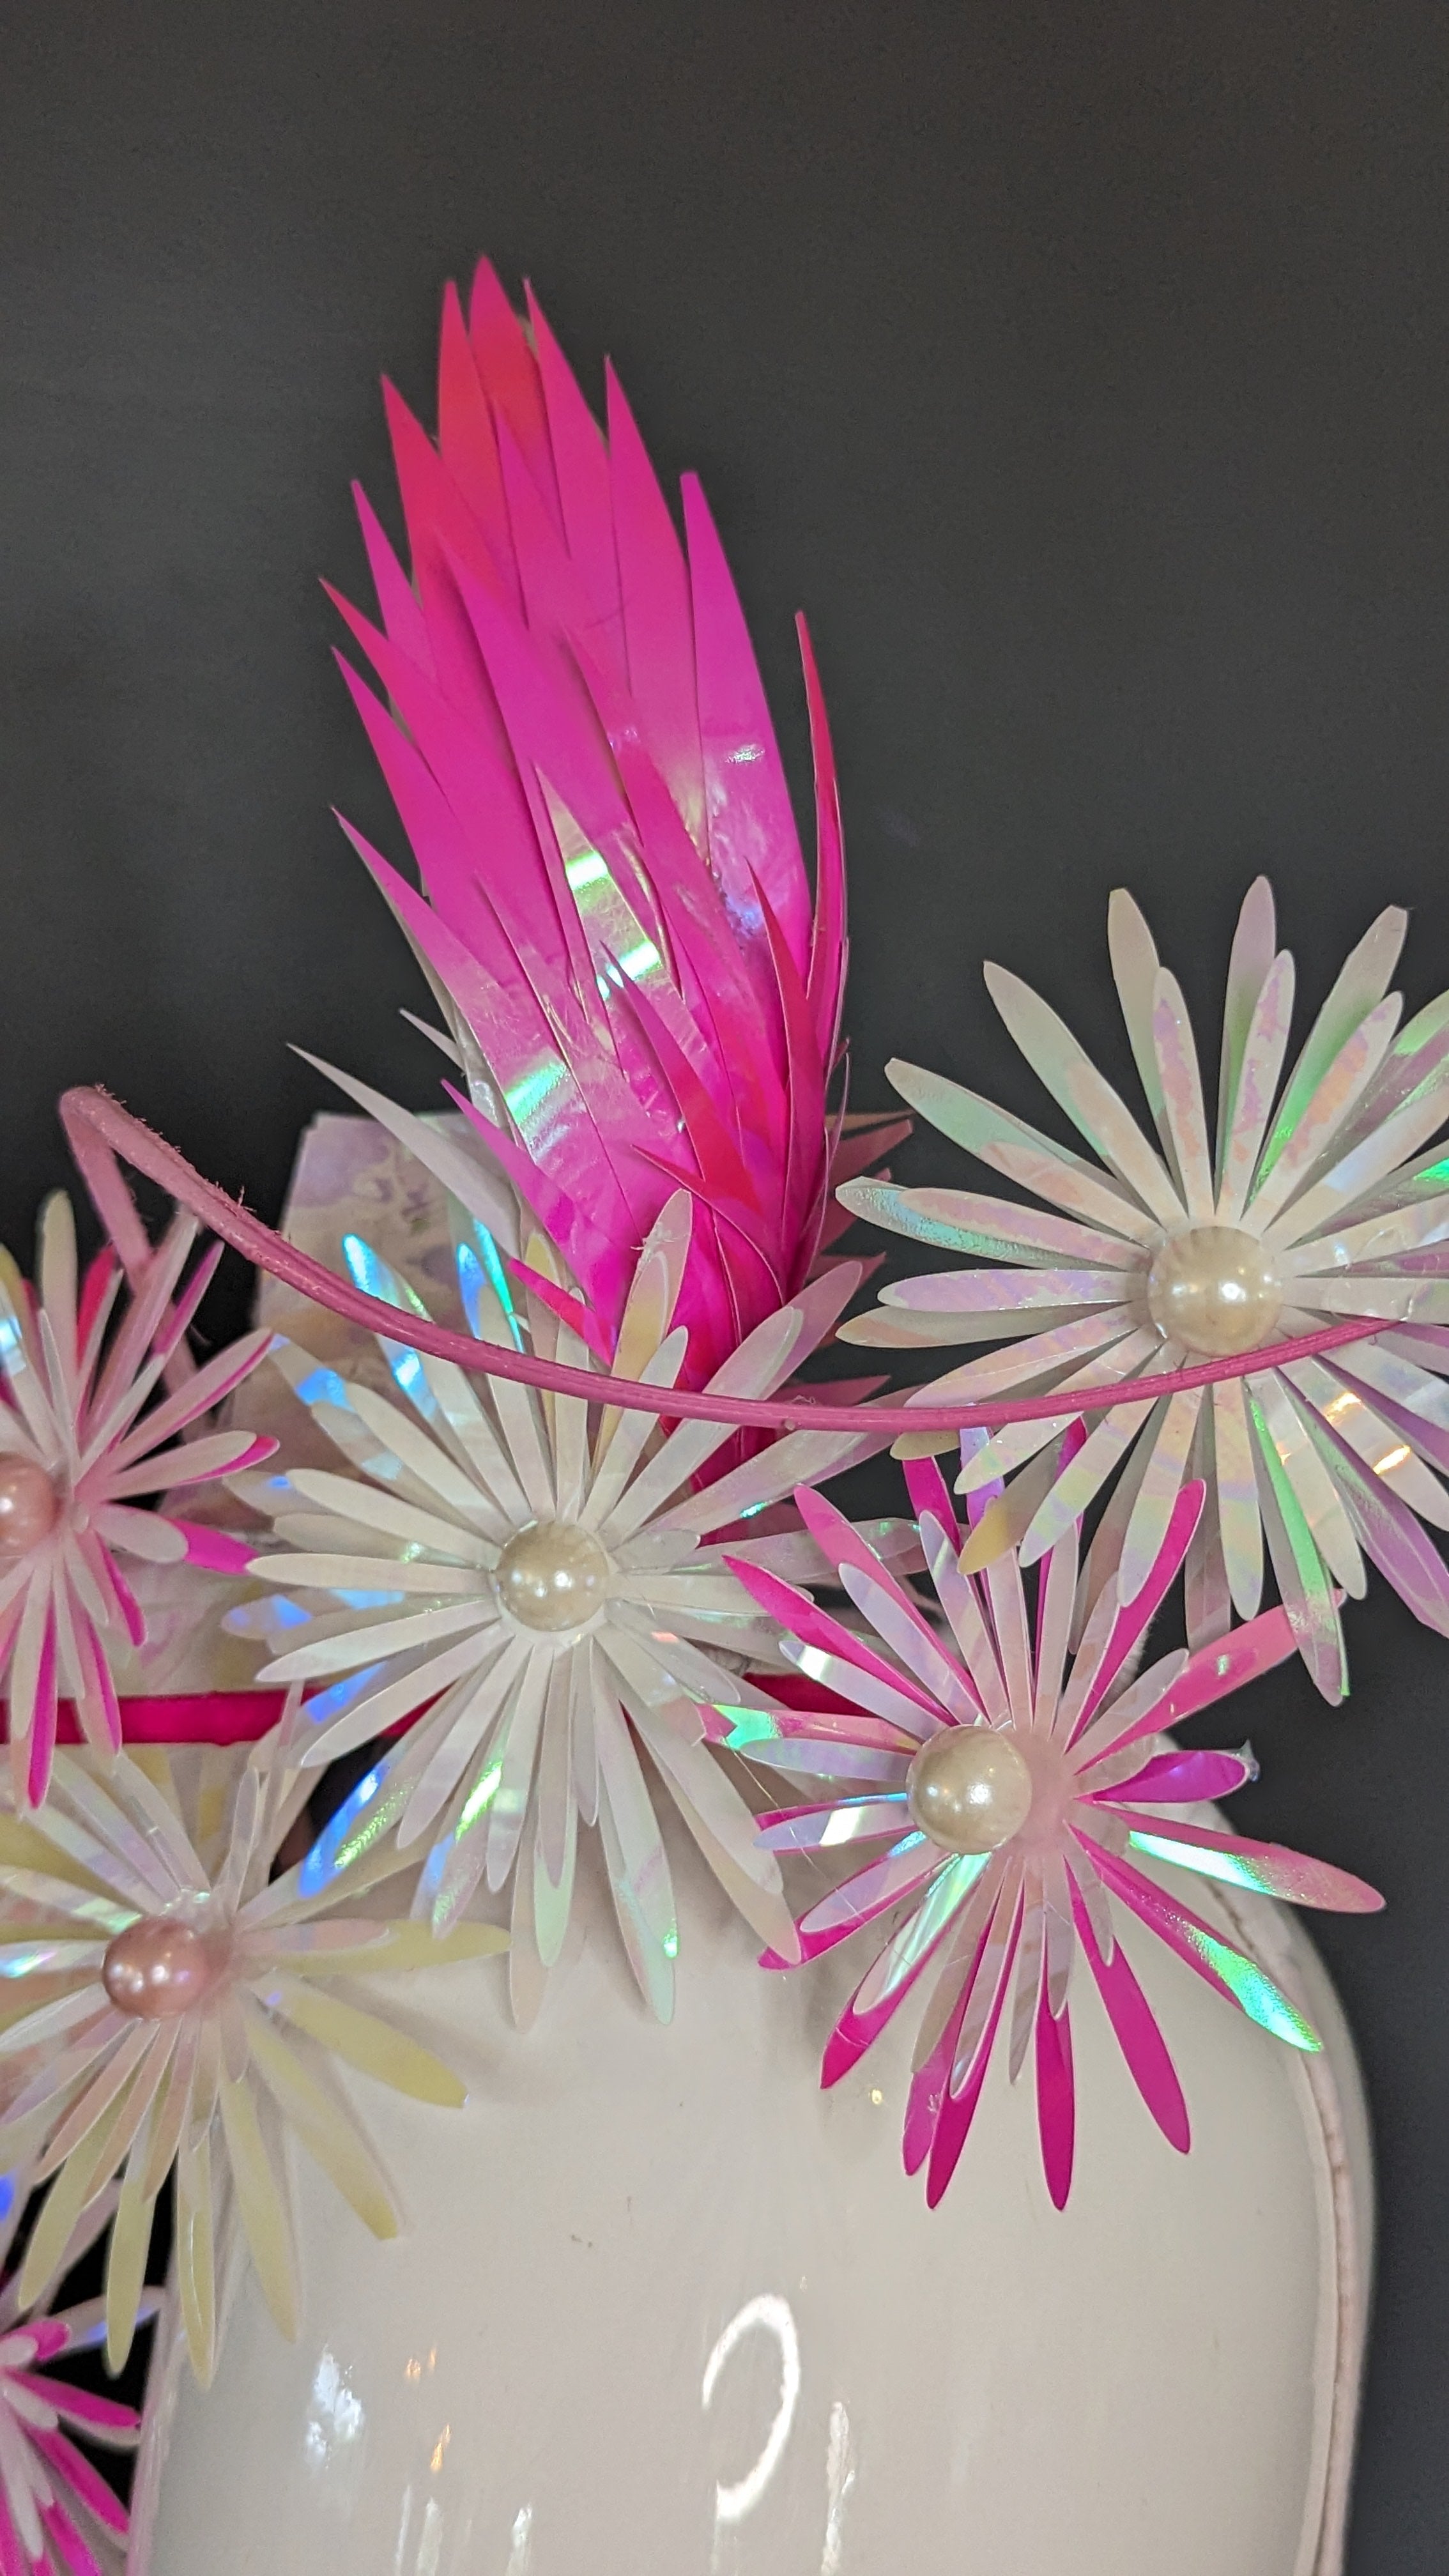 Kauai Irridescent & Pearlescent Swirled Blooms